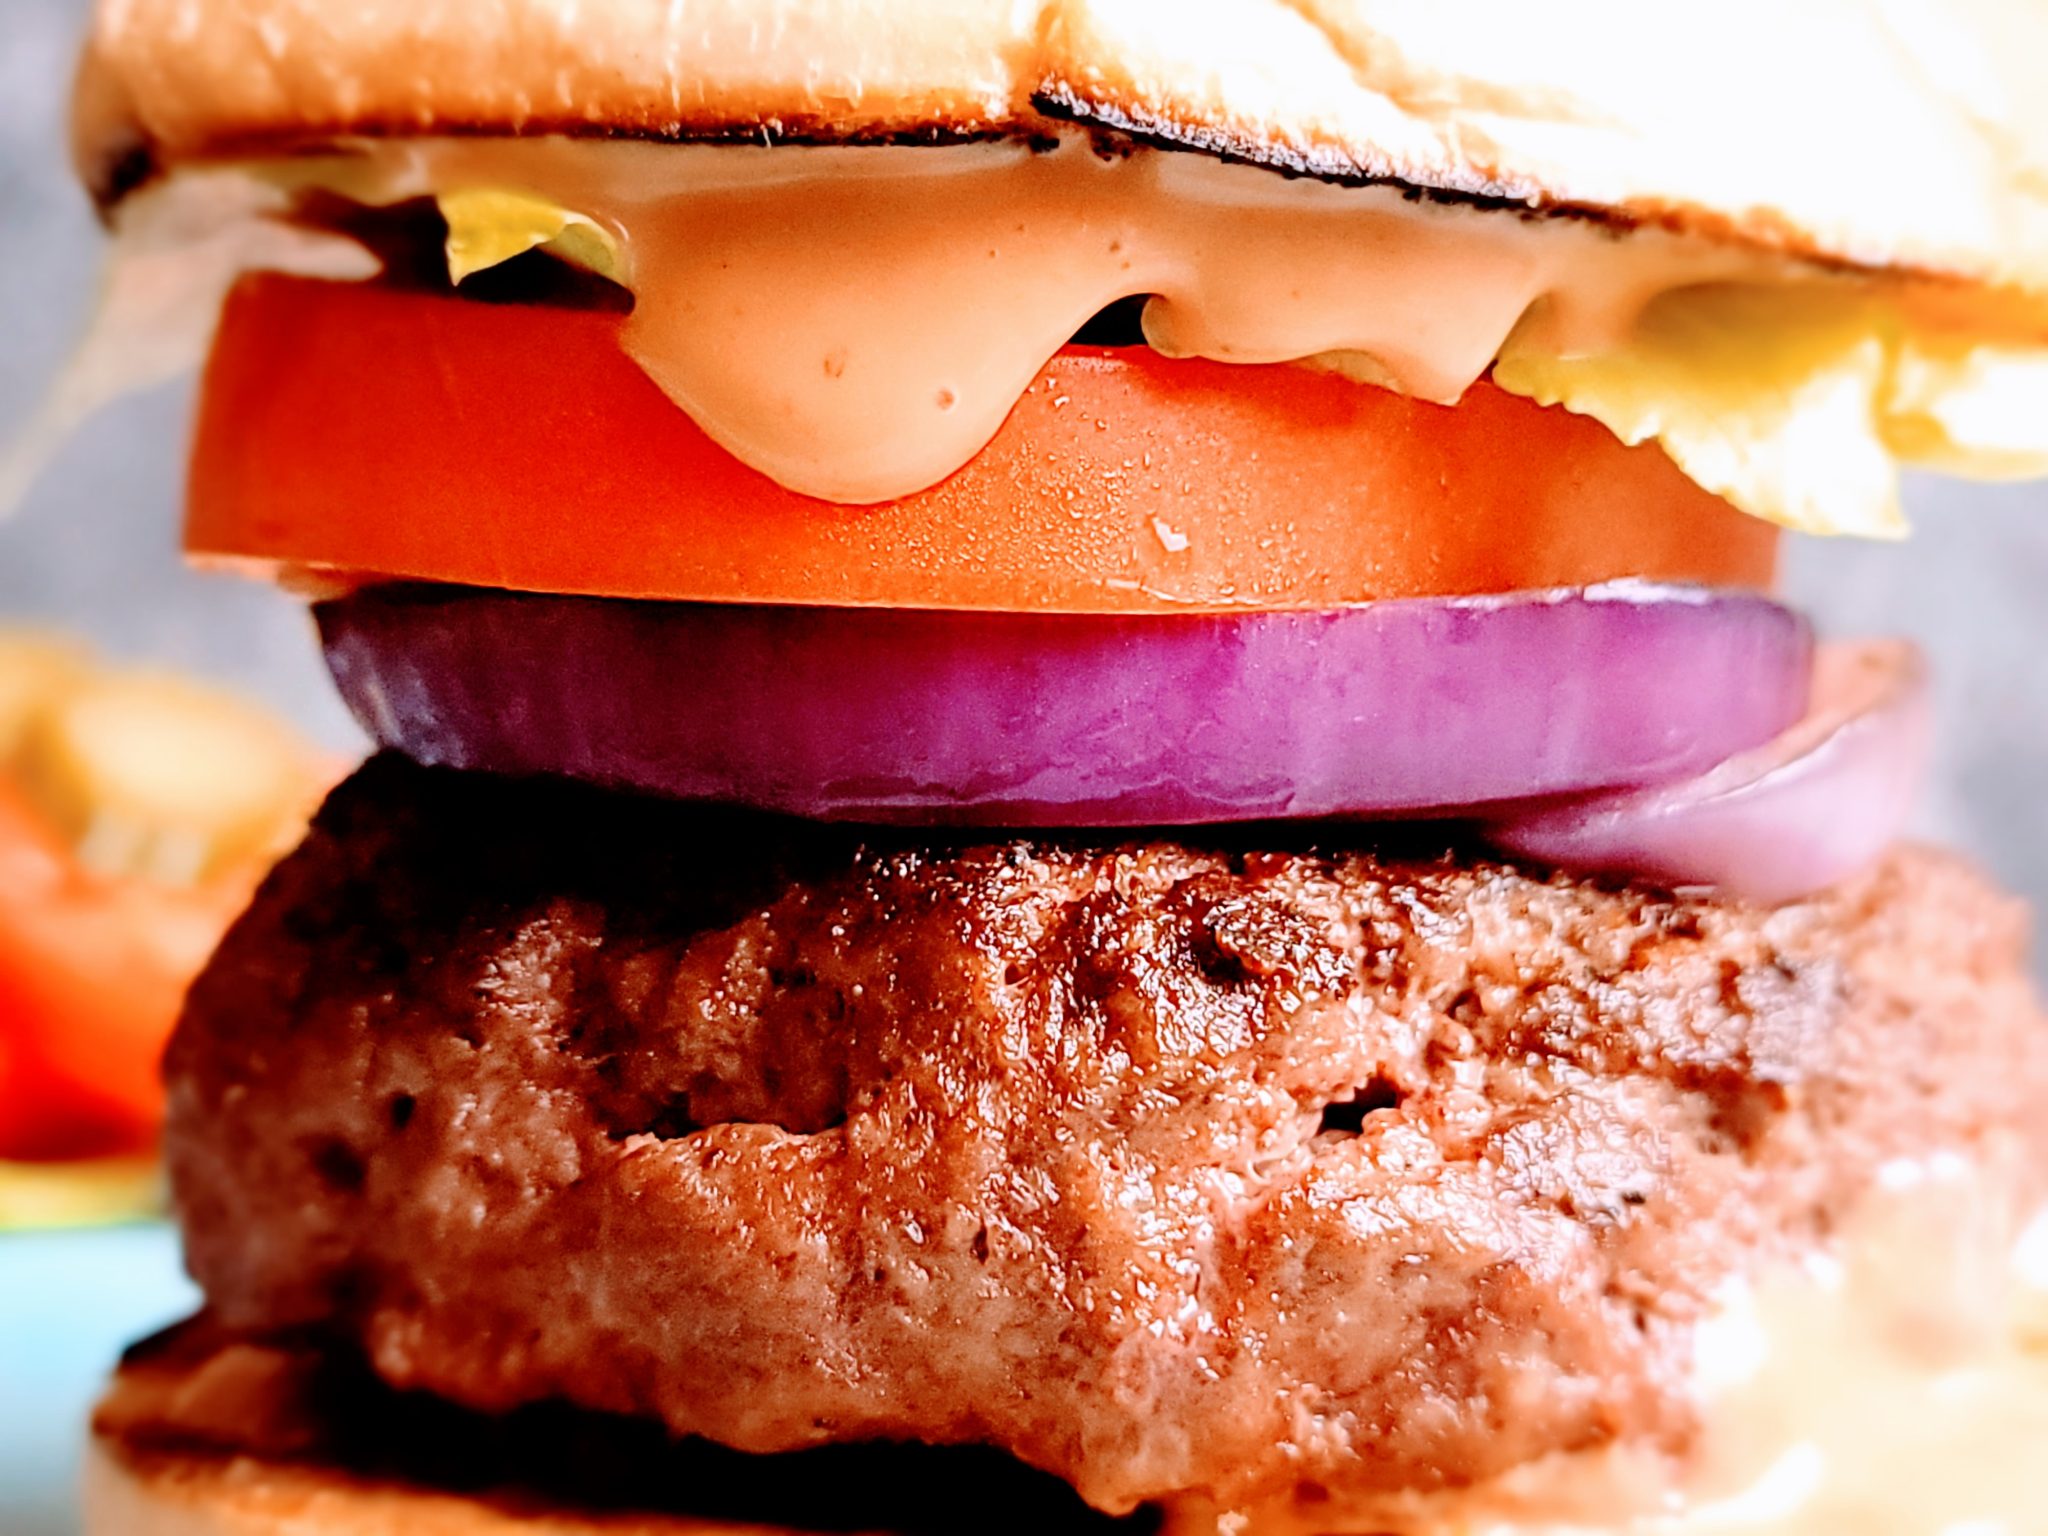 https://throwdownkitchen.com/wp-content/uploads/2021/06/Steakhouse-Burger-scaled.jpg